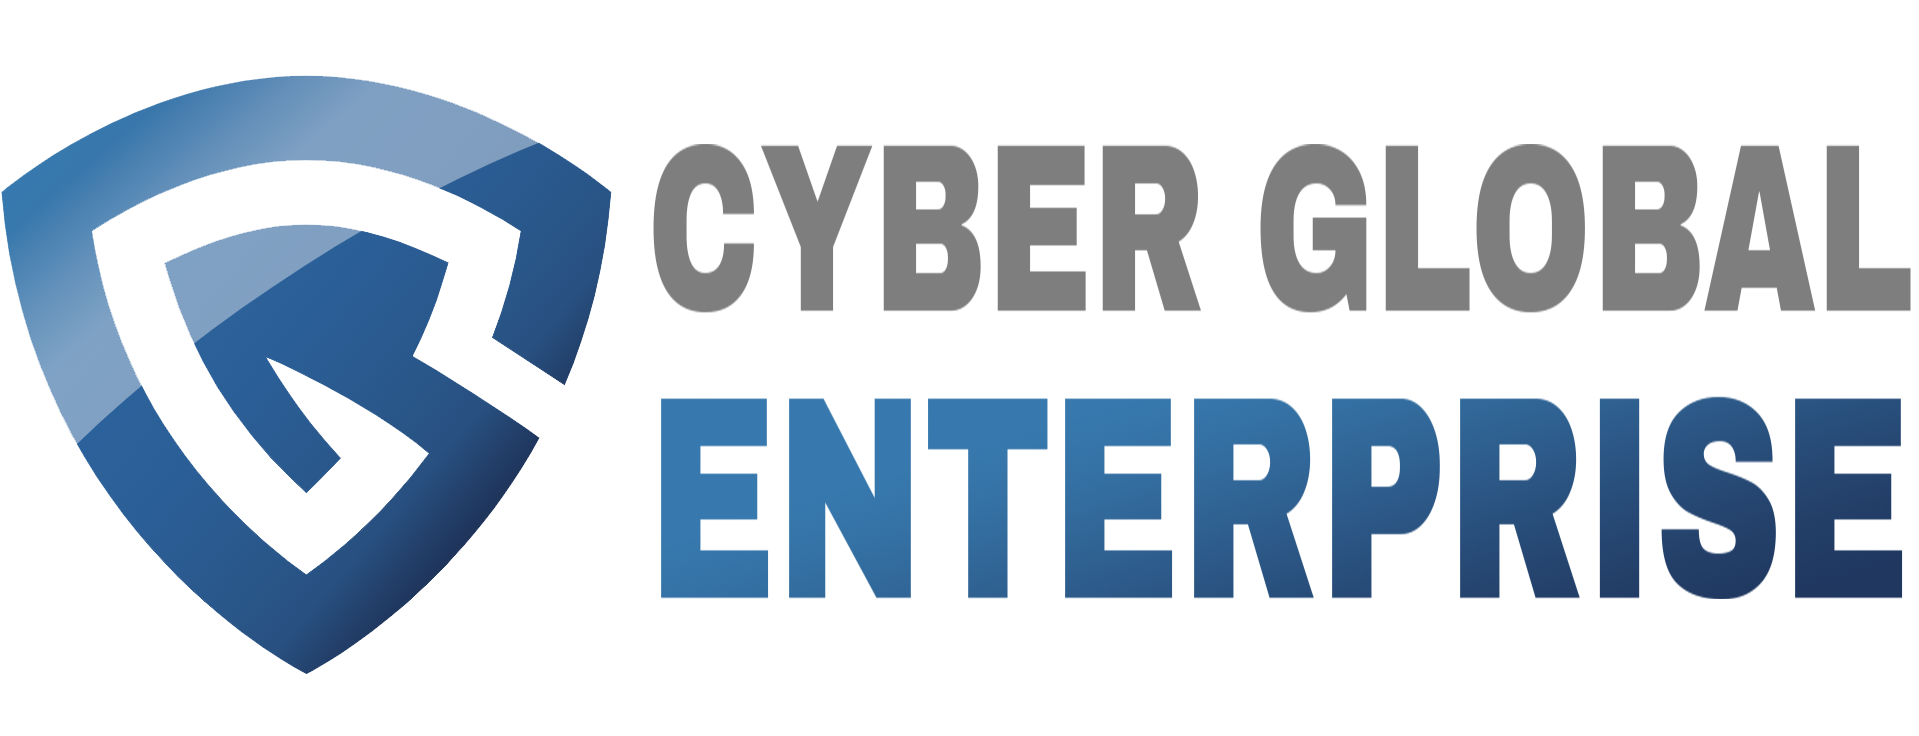 Cyber Global Enterprise